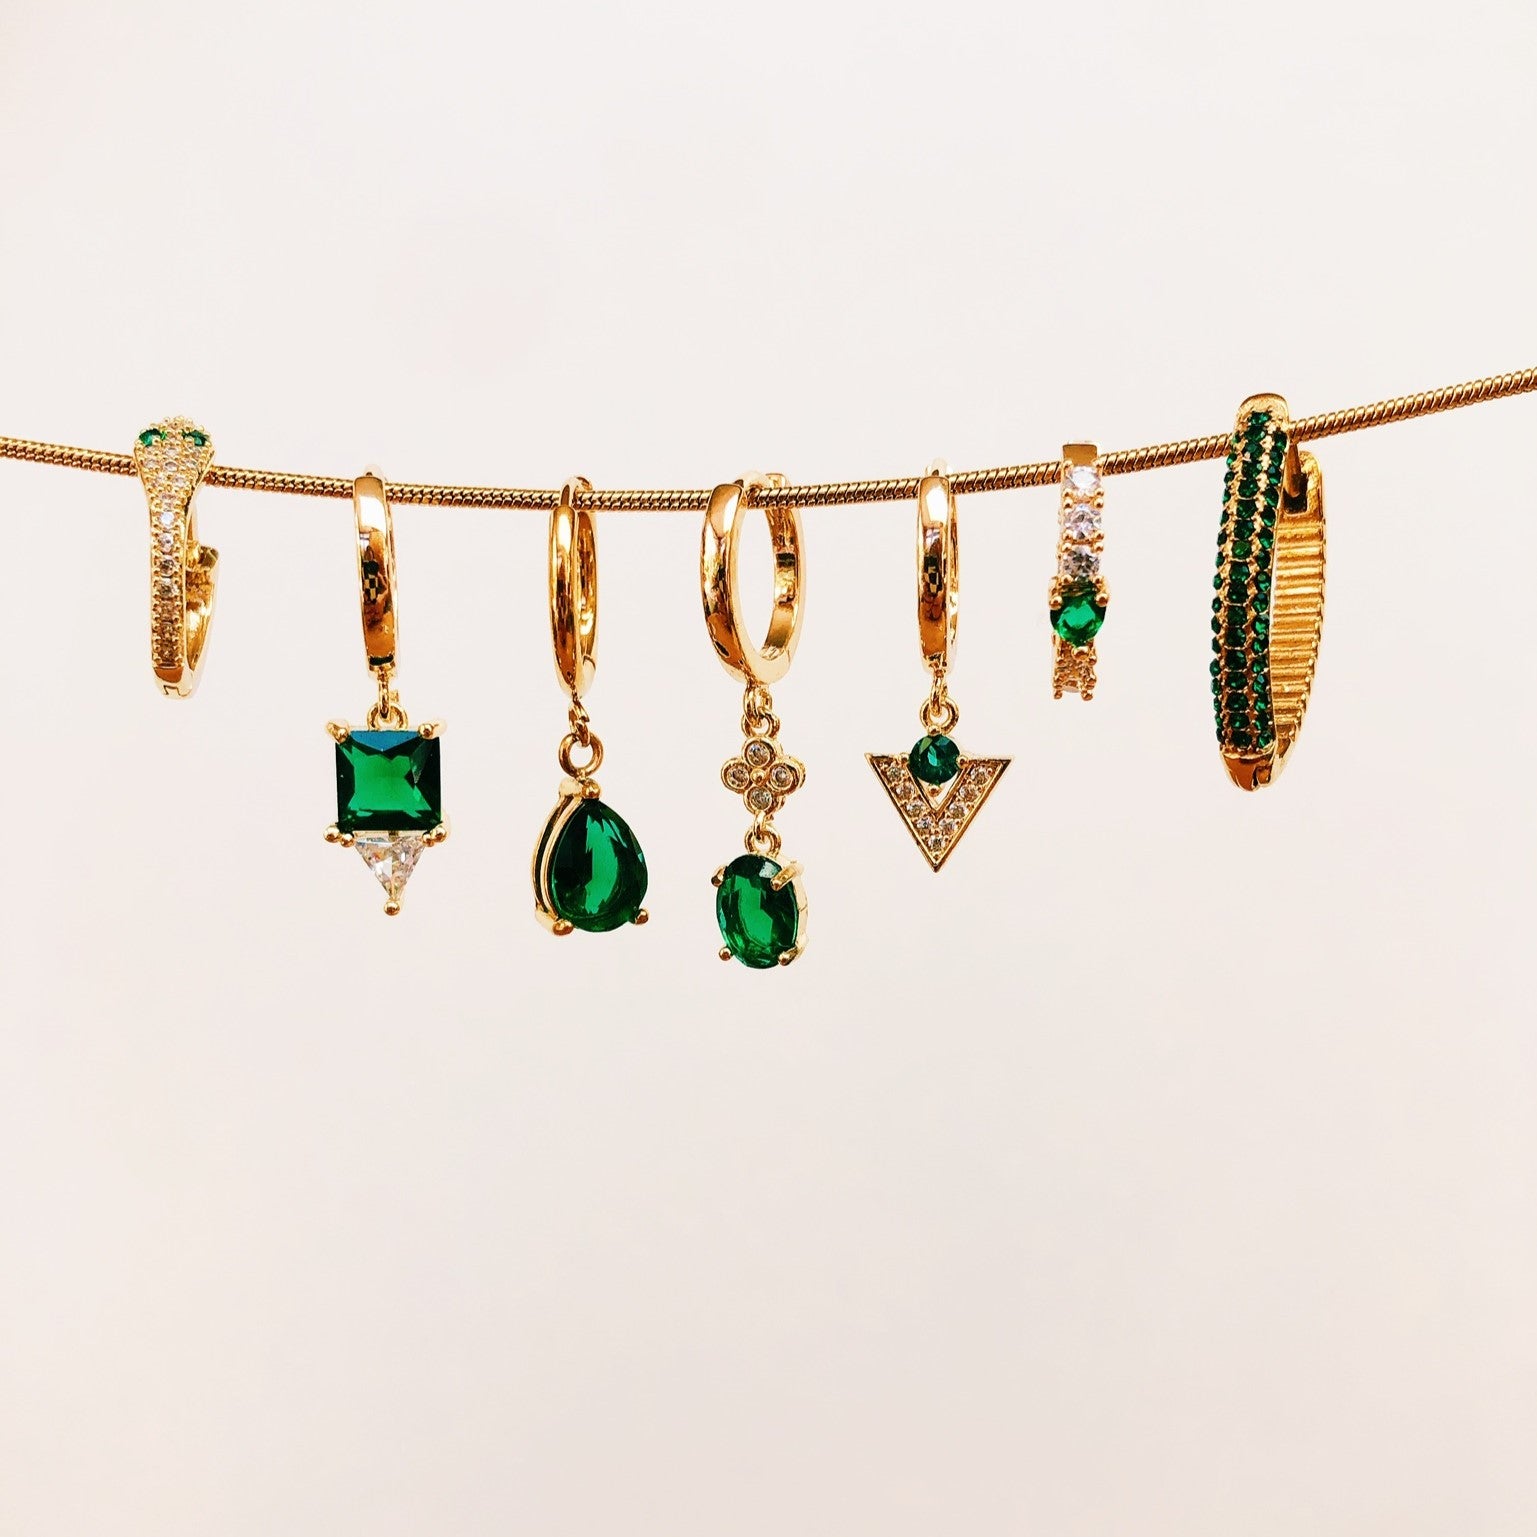 Earrings hanging drops green